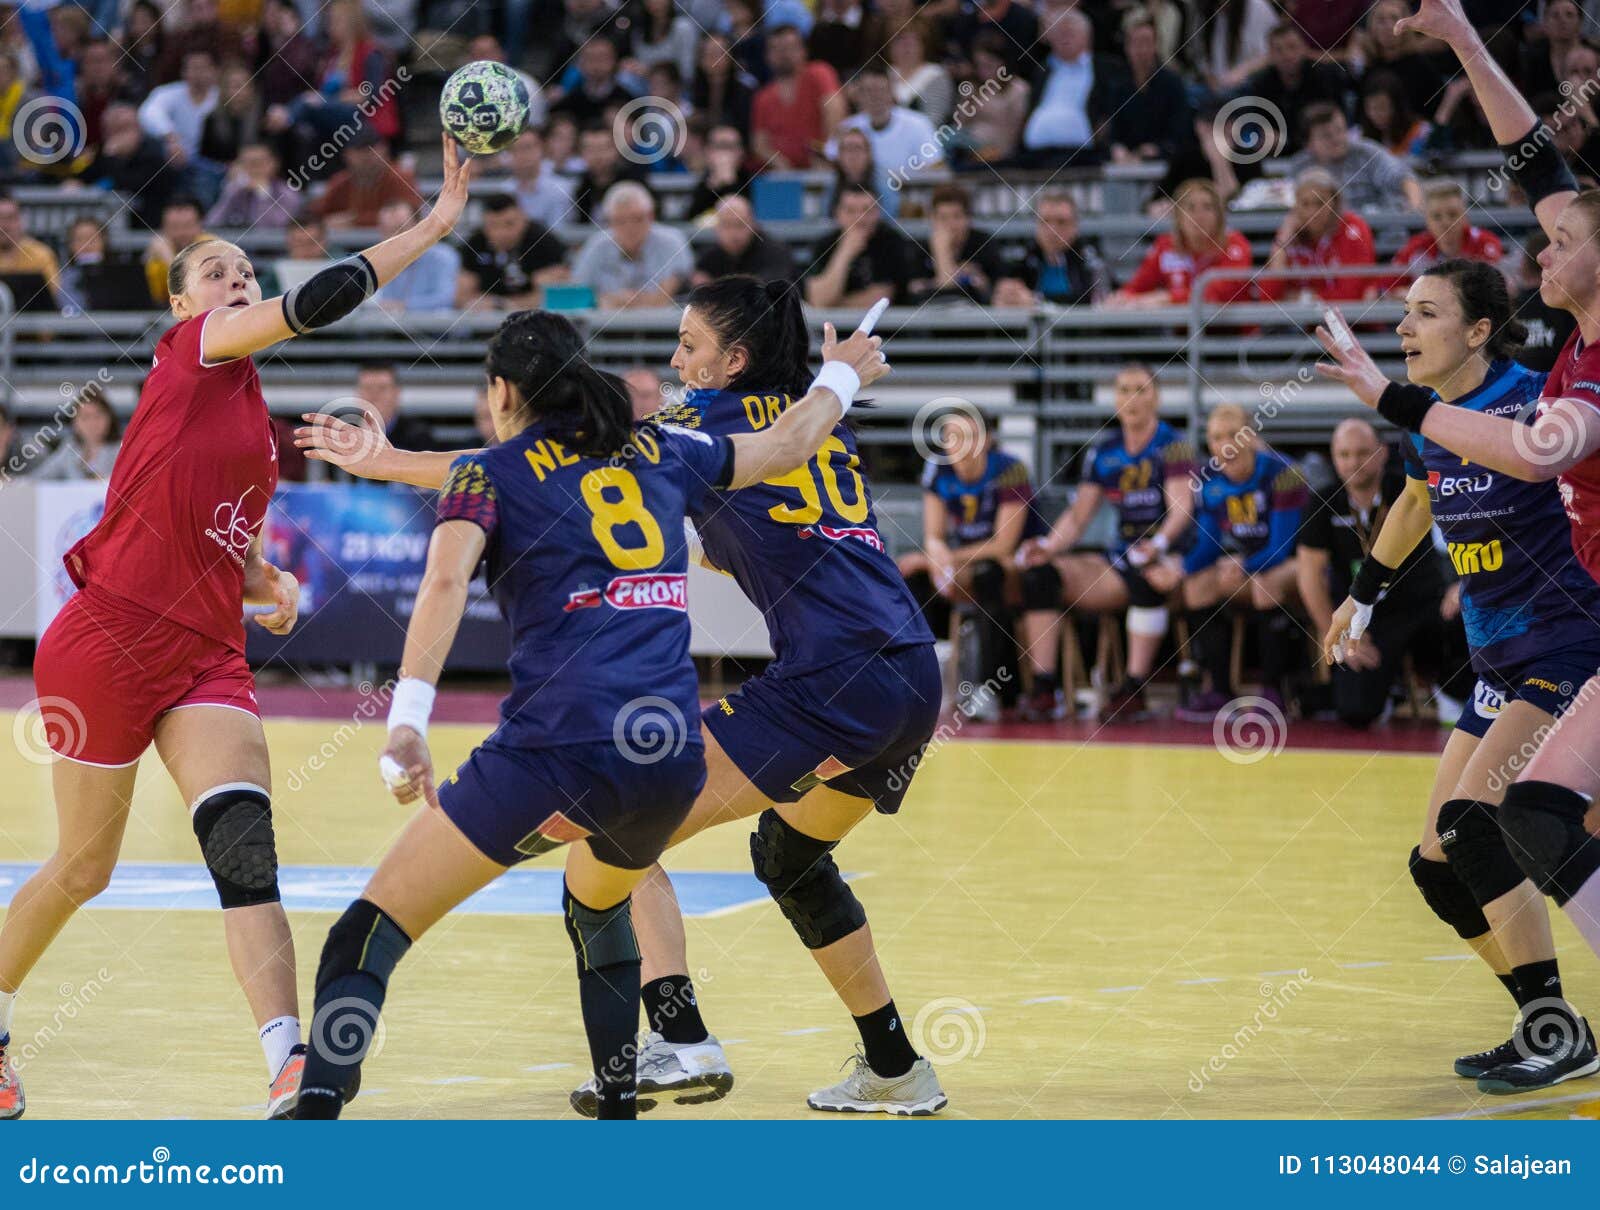 Women playing handball editorial stock image. Image of active - 113048044